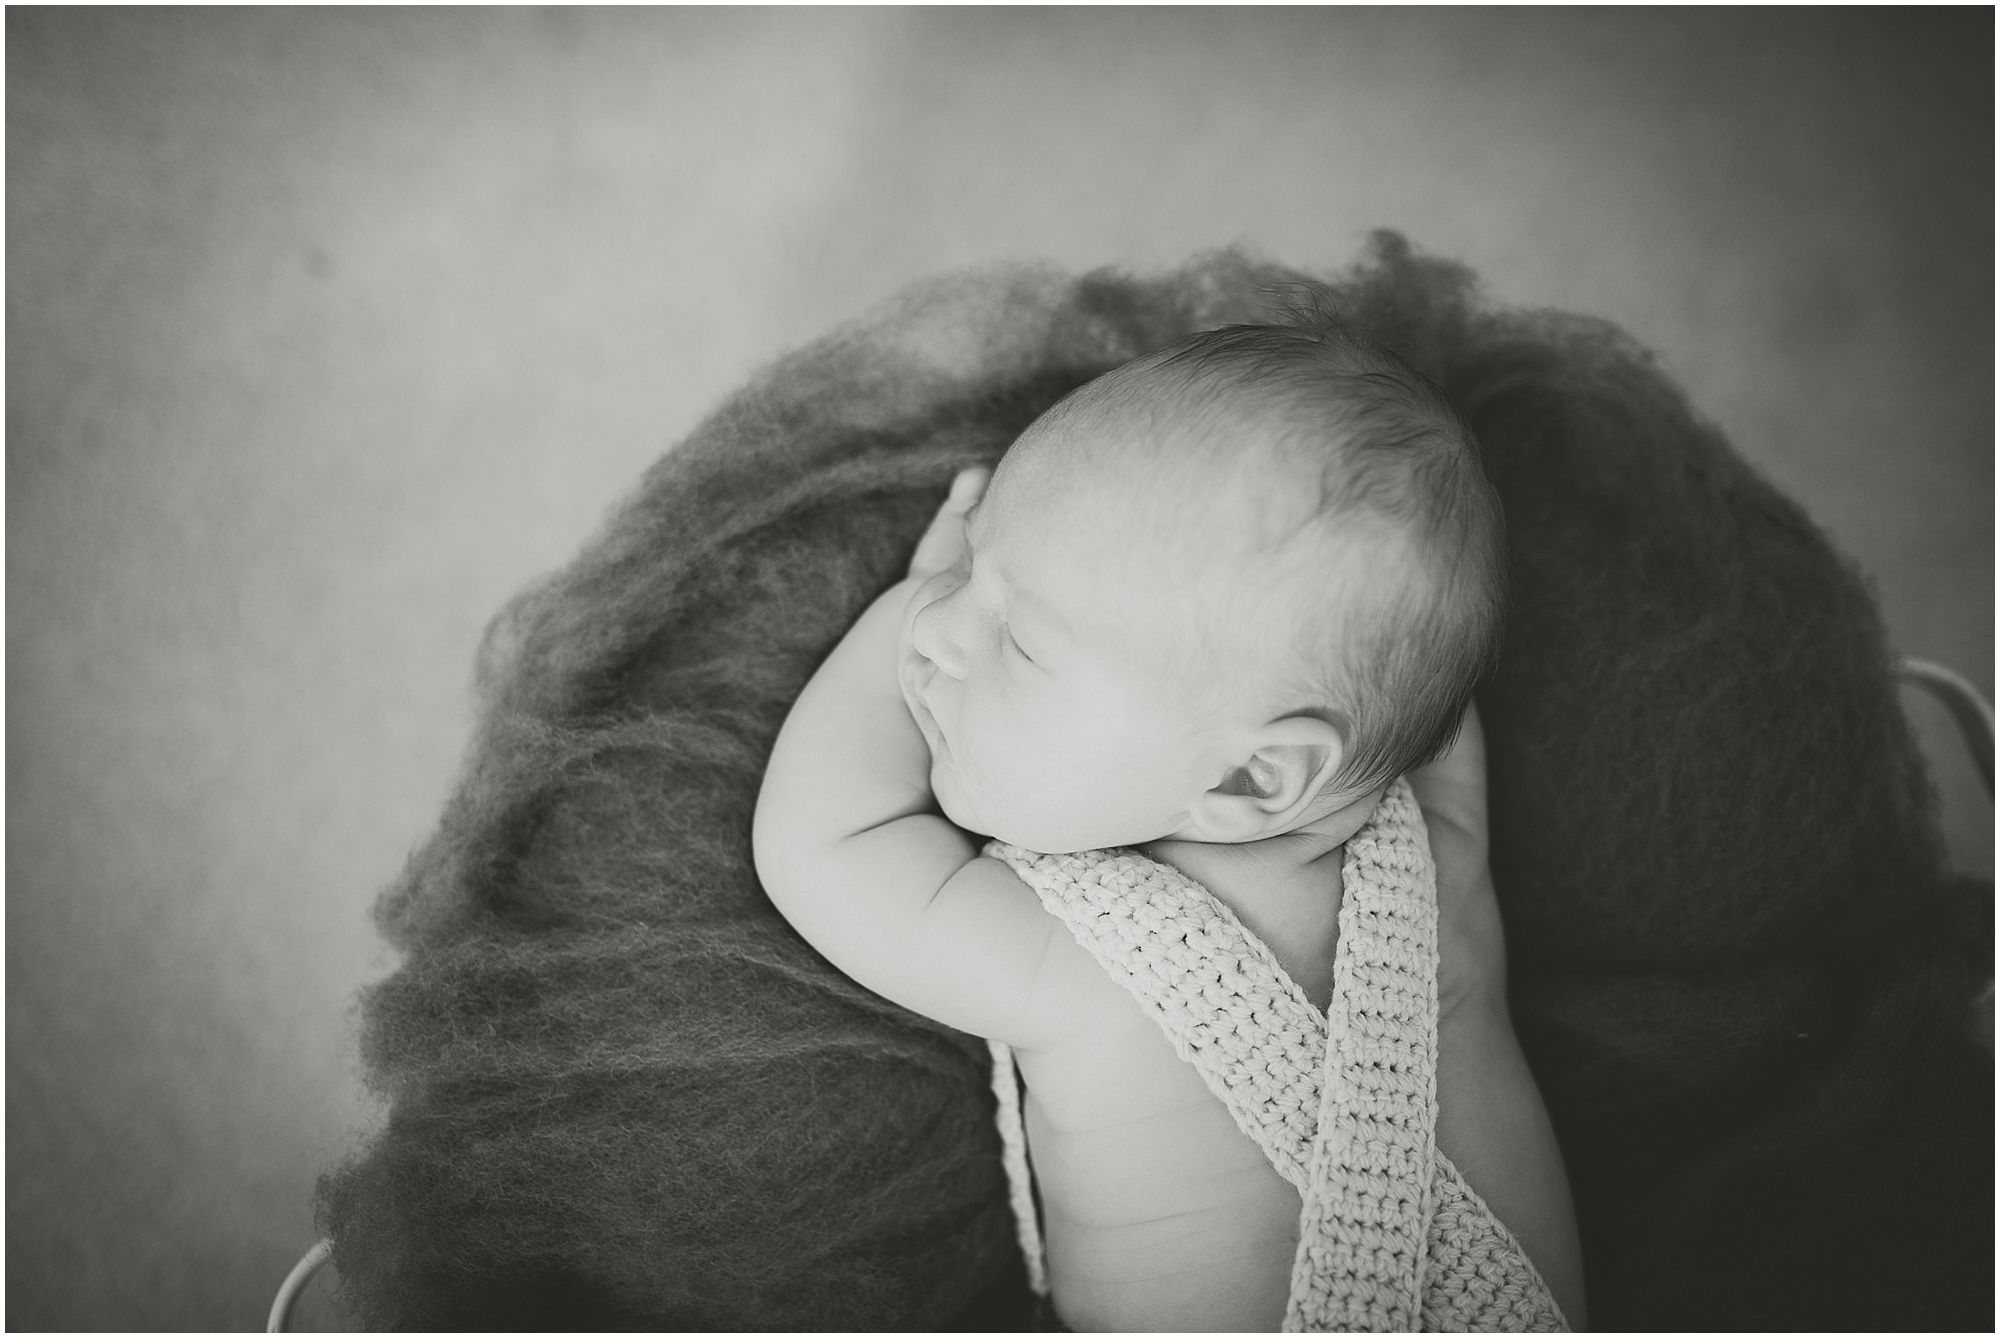 Max, photographed by cardiff newborn photographer, Cross-Jones-Photography